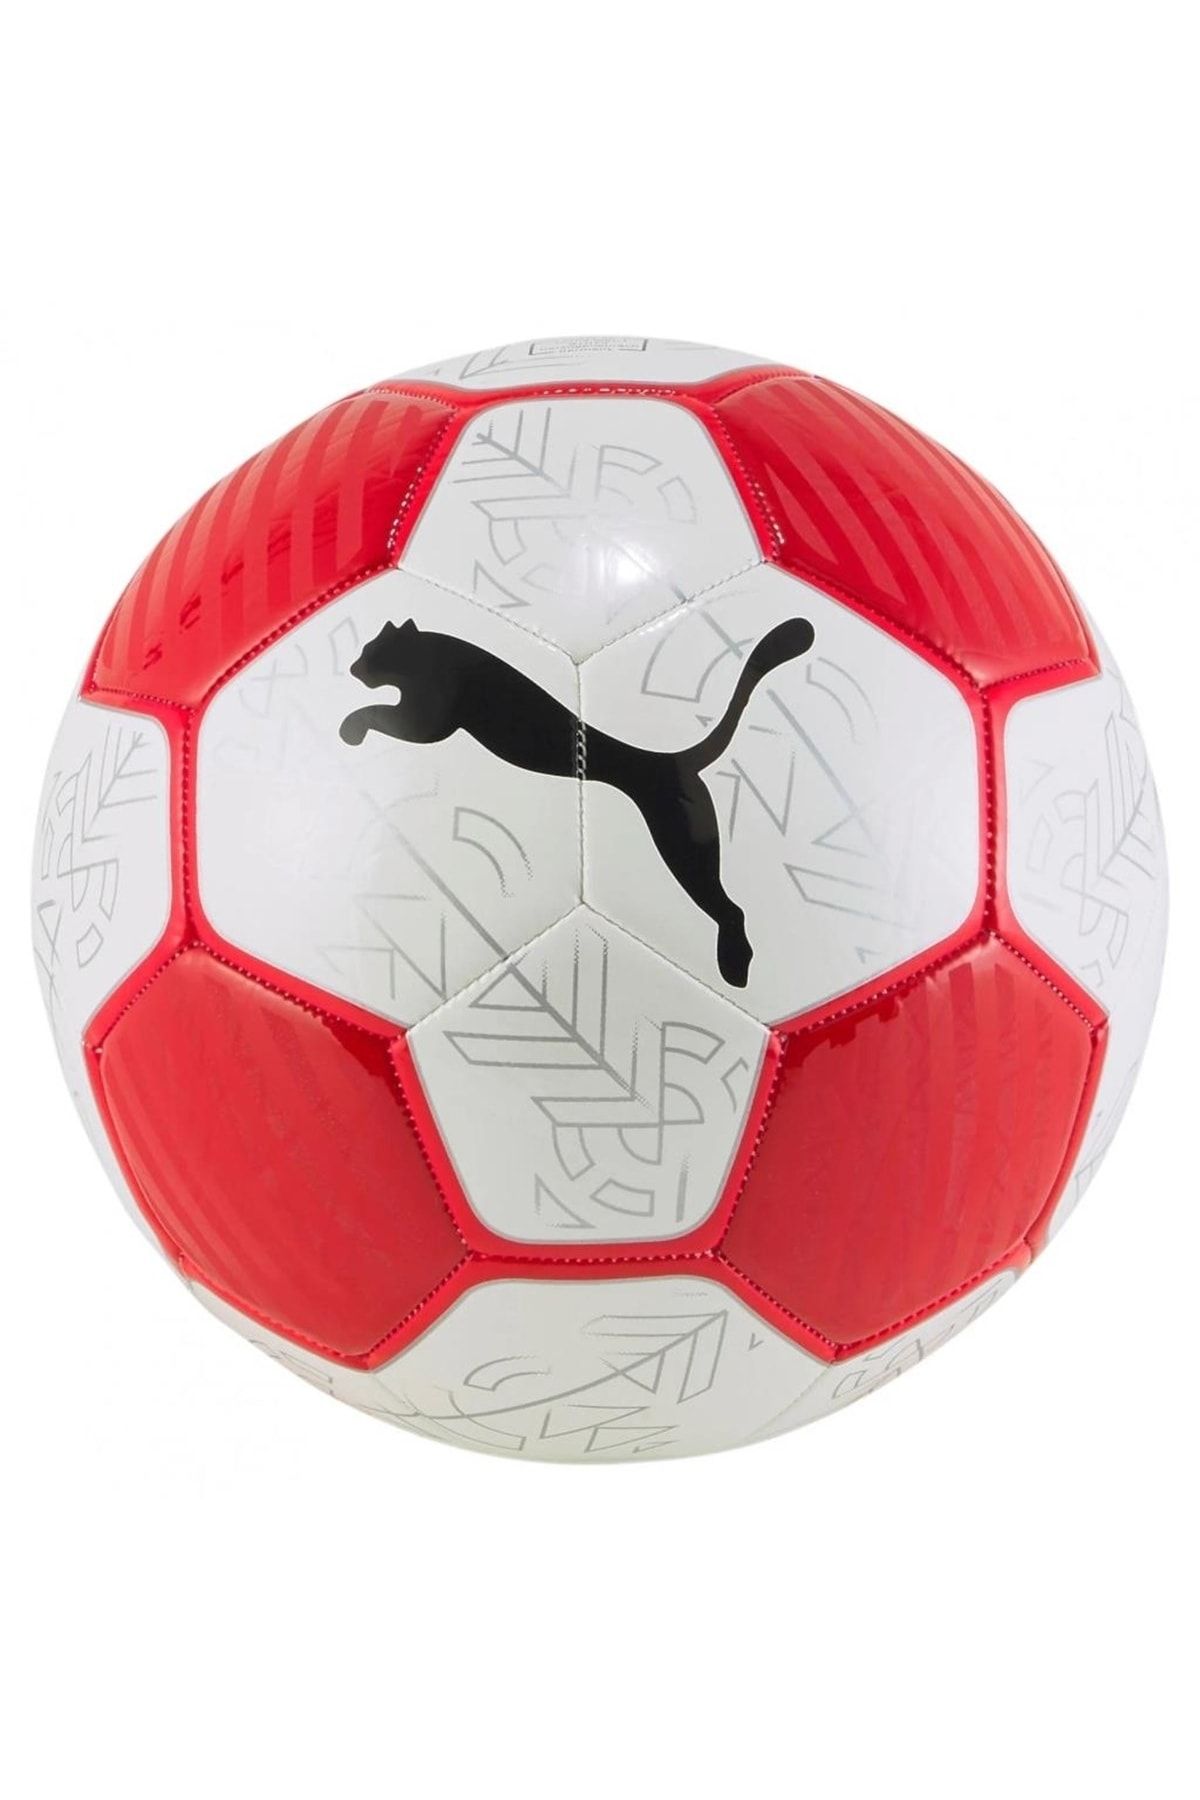 Puma Prestige Ball Futbol Topu 5 Numara Kırmızı 08399202